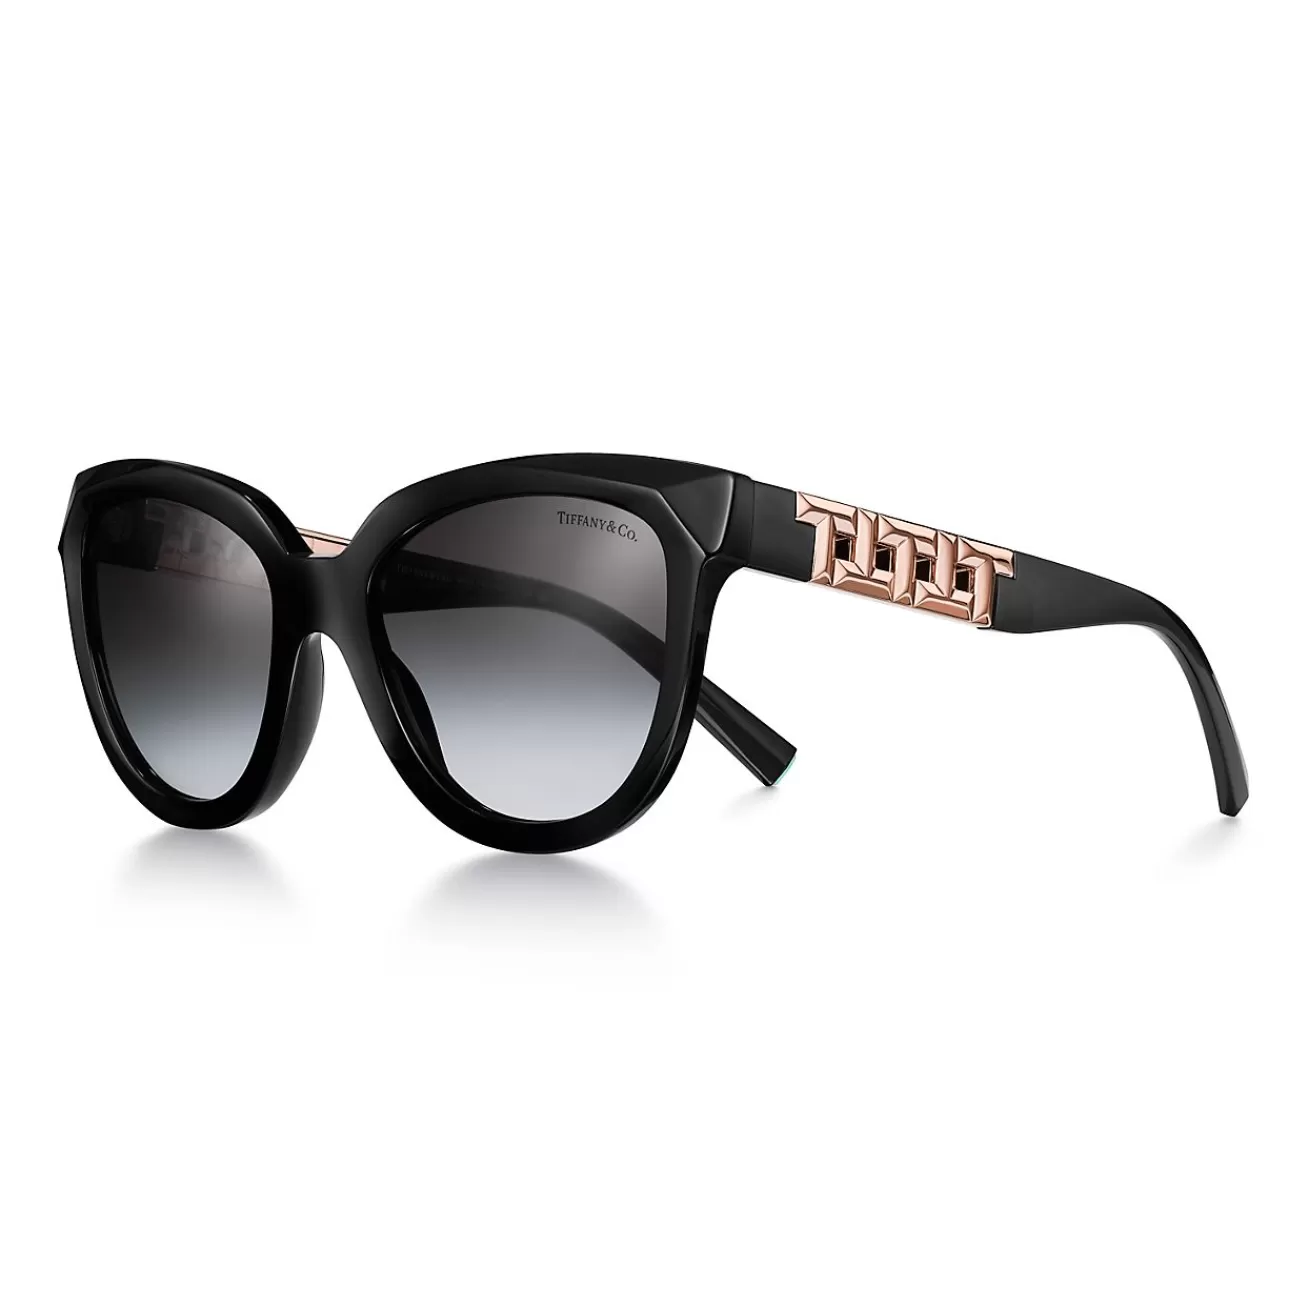 Tiffany & Co. Tiffany T True Sunglasses in Black Acetate with Gray Lenses | ^Women Tiffany T | Sunglasses